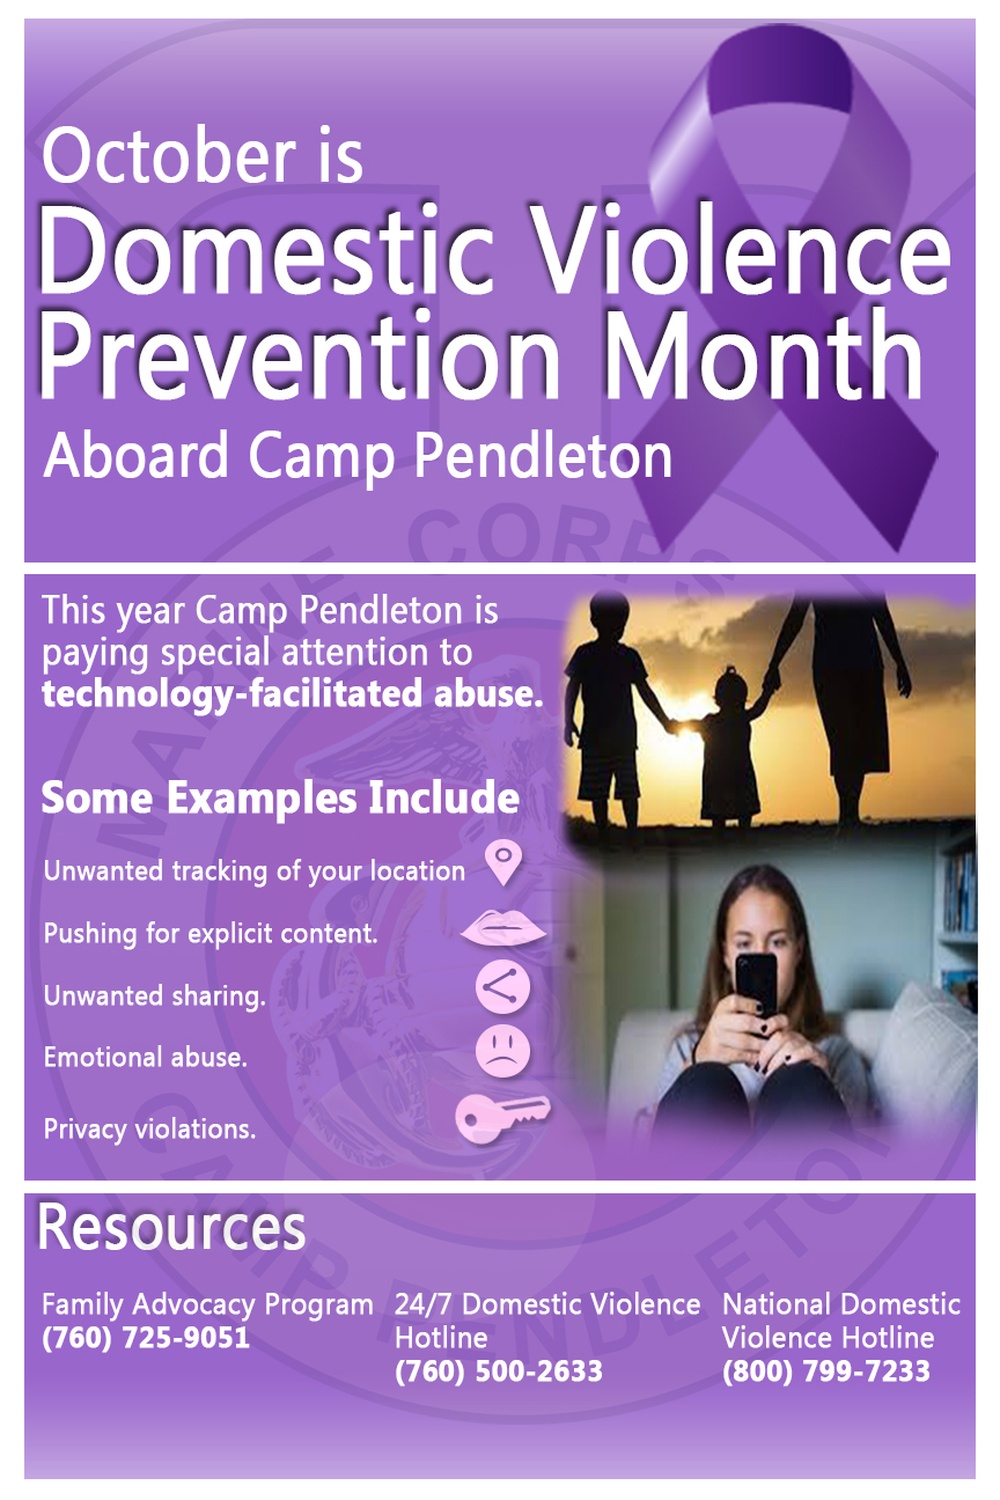 Domestic Violence Prevention Month